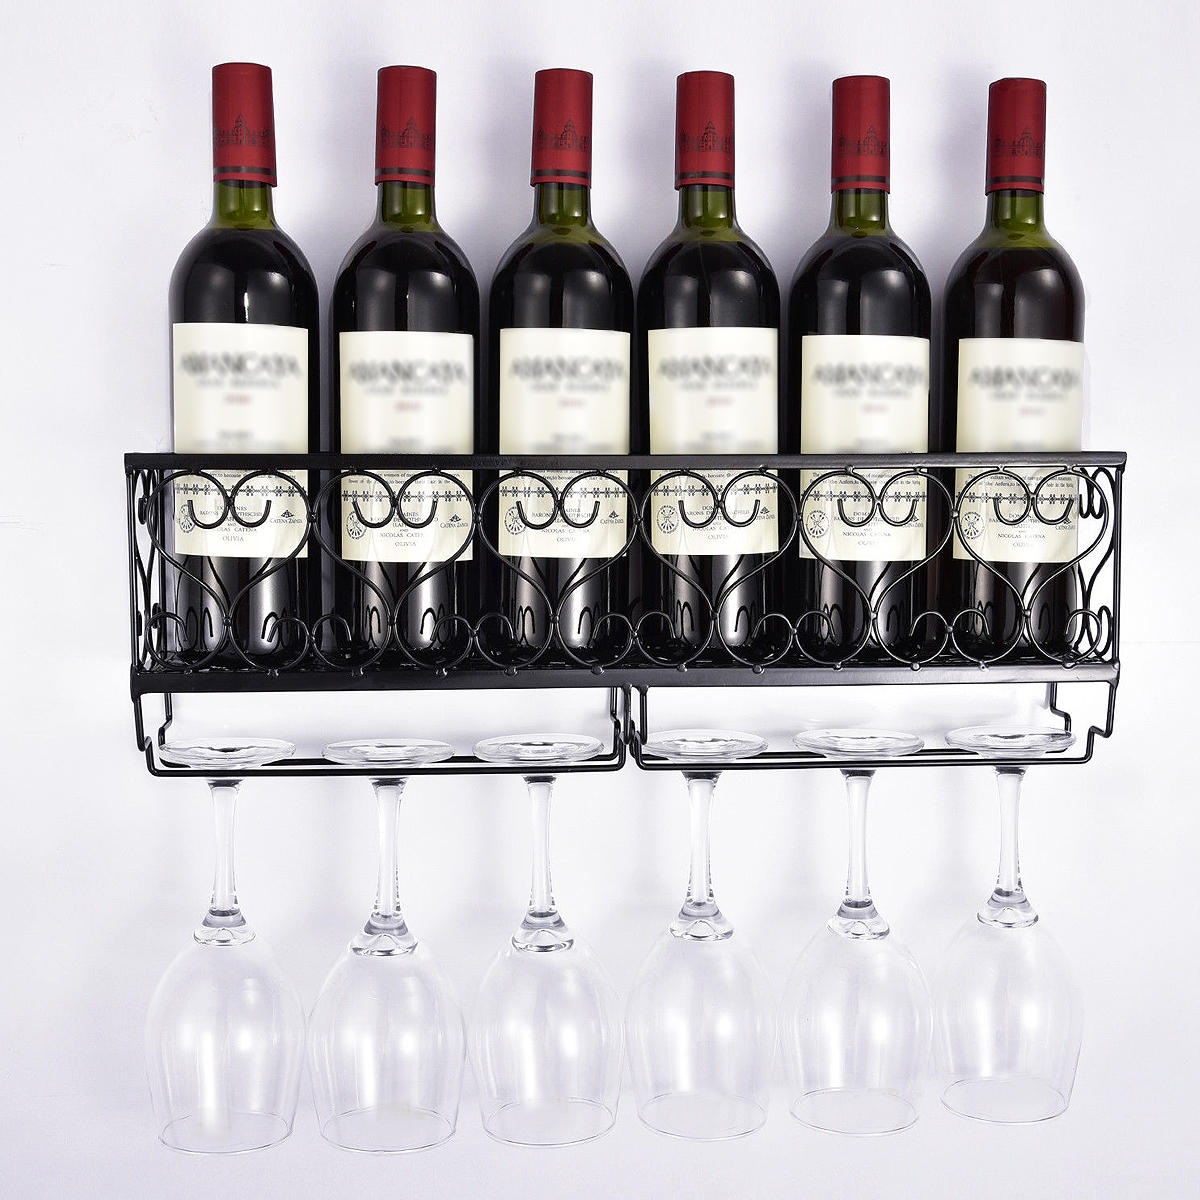 50.2cm x 10cm x 16.5cm Wall Mounted Cup Rack Bottle Glass Holder Shelf Bar Accessory